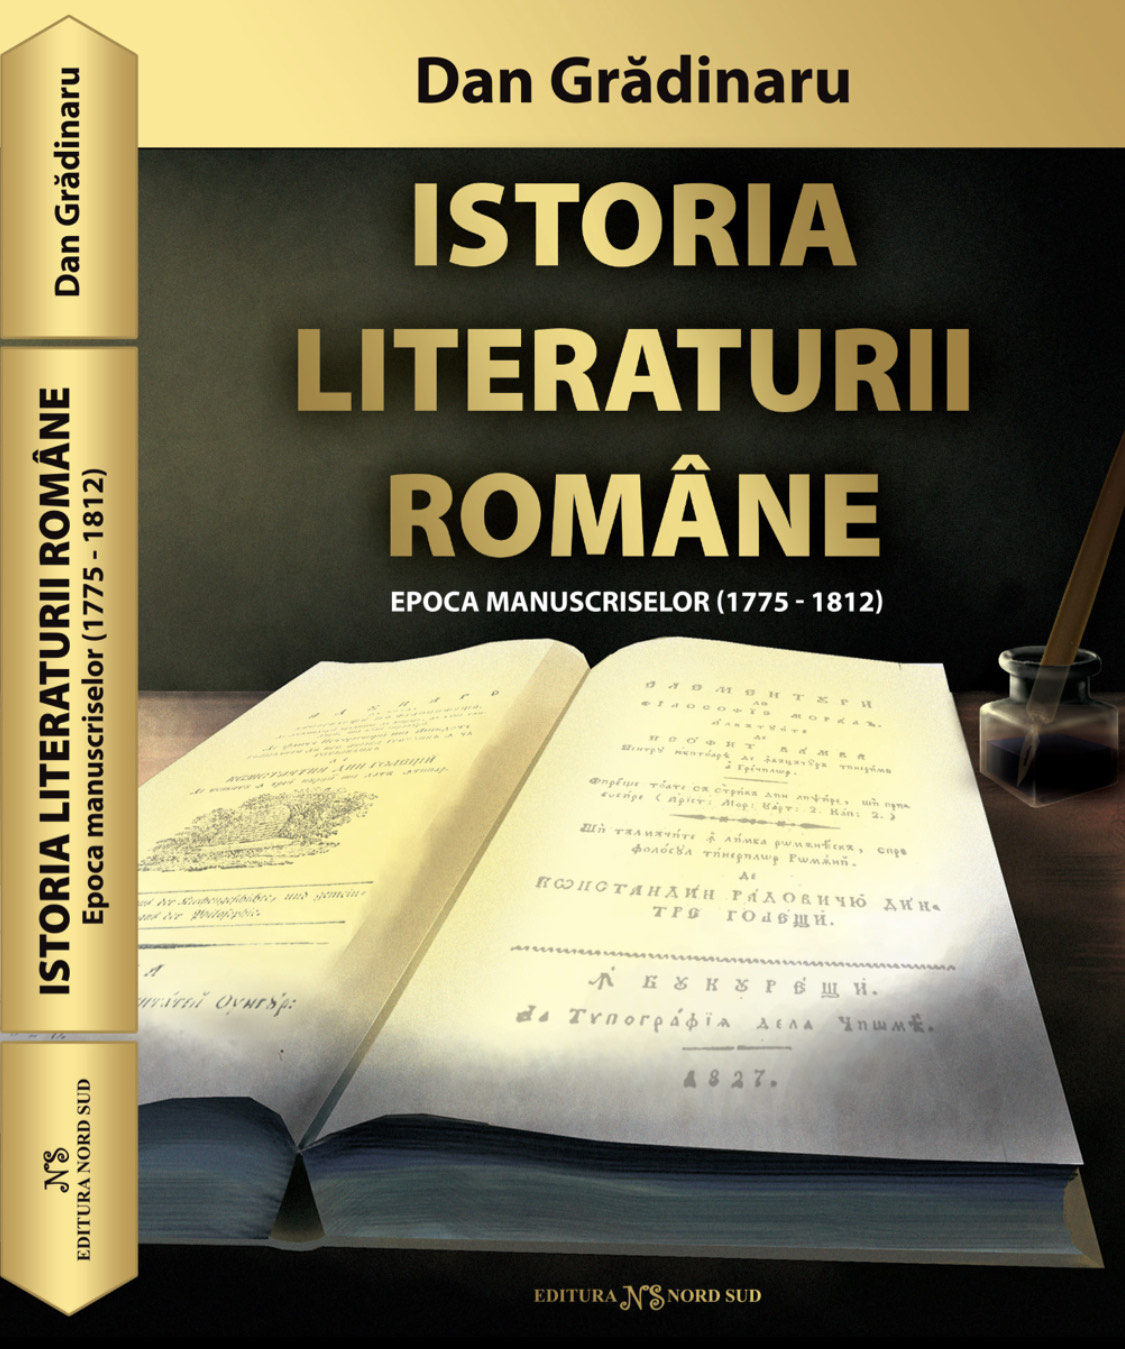 Istoria Literaturii Romane – Epoca Manuscriselor 1775 – 1812 | Dan Gradinaru carturesti.ro poza bestsellers.ro